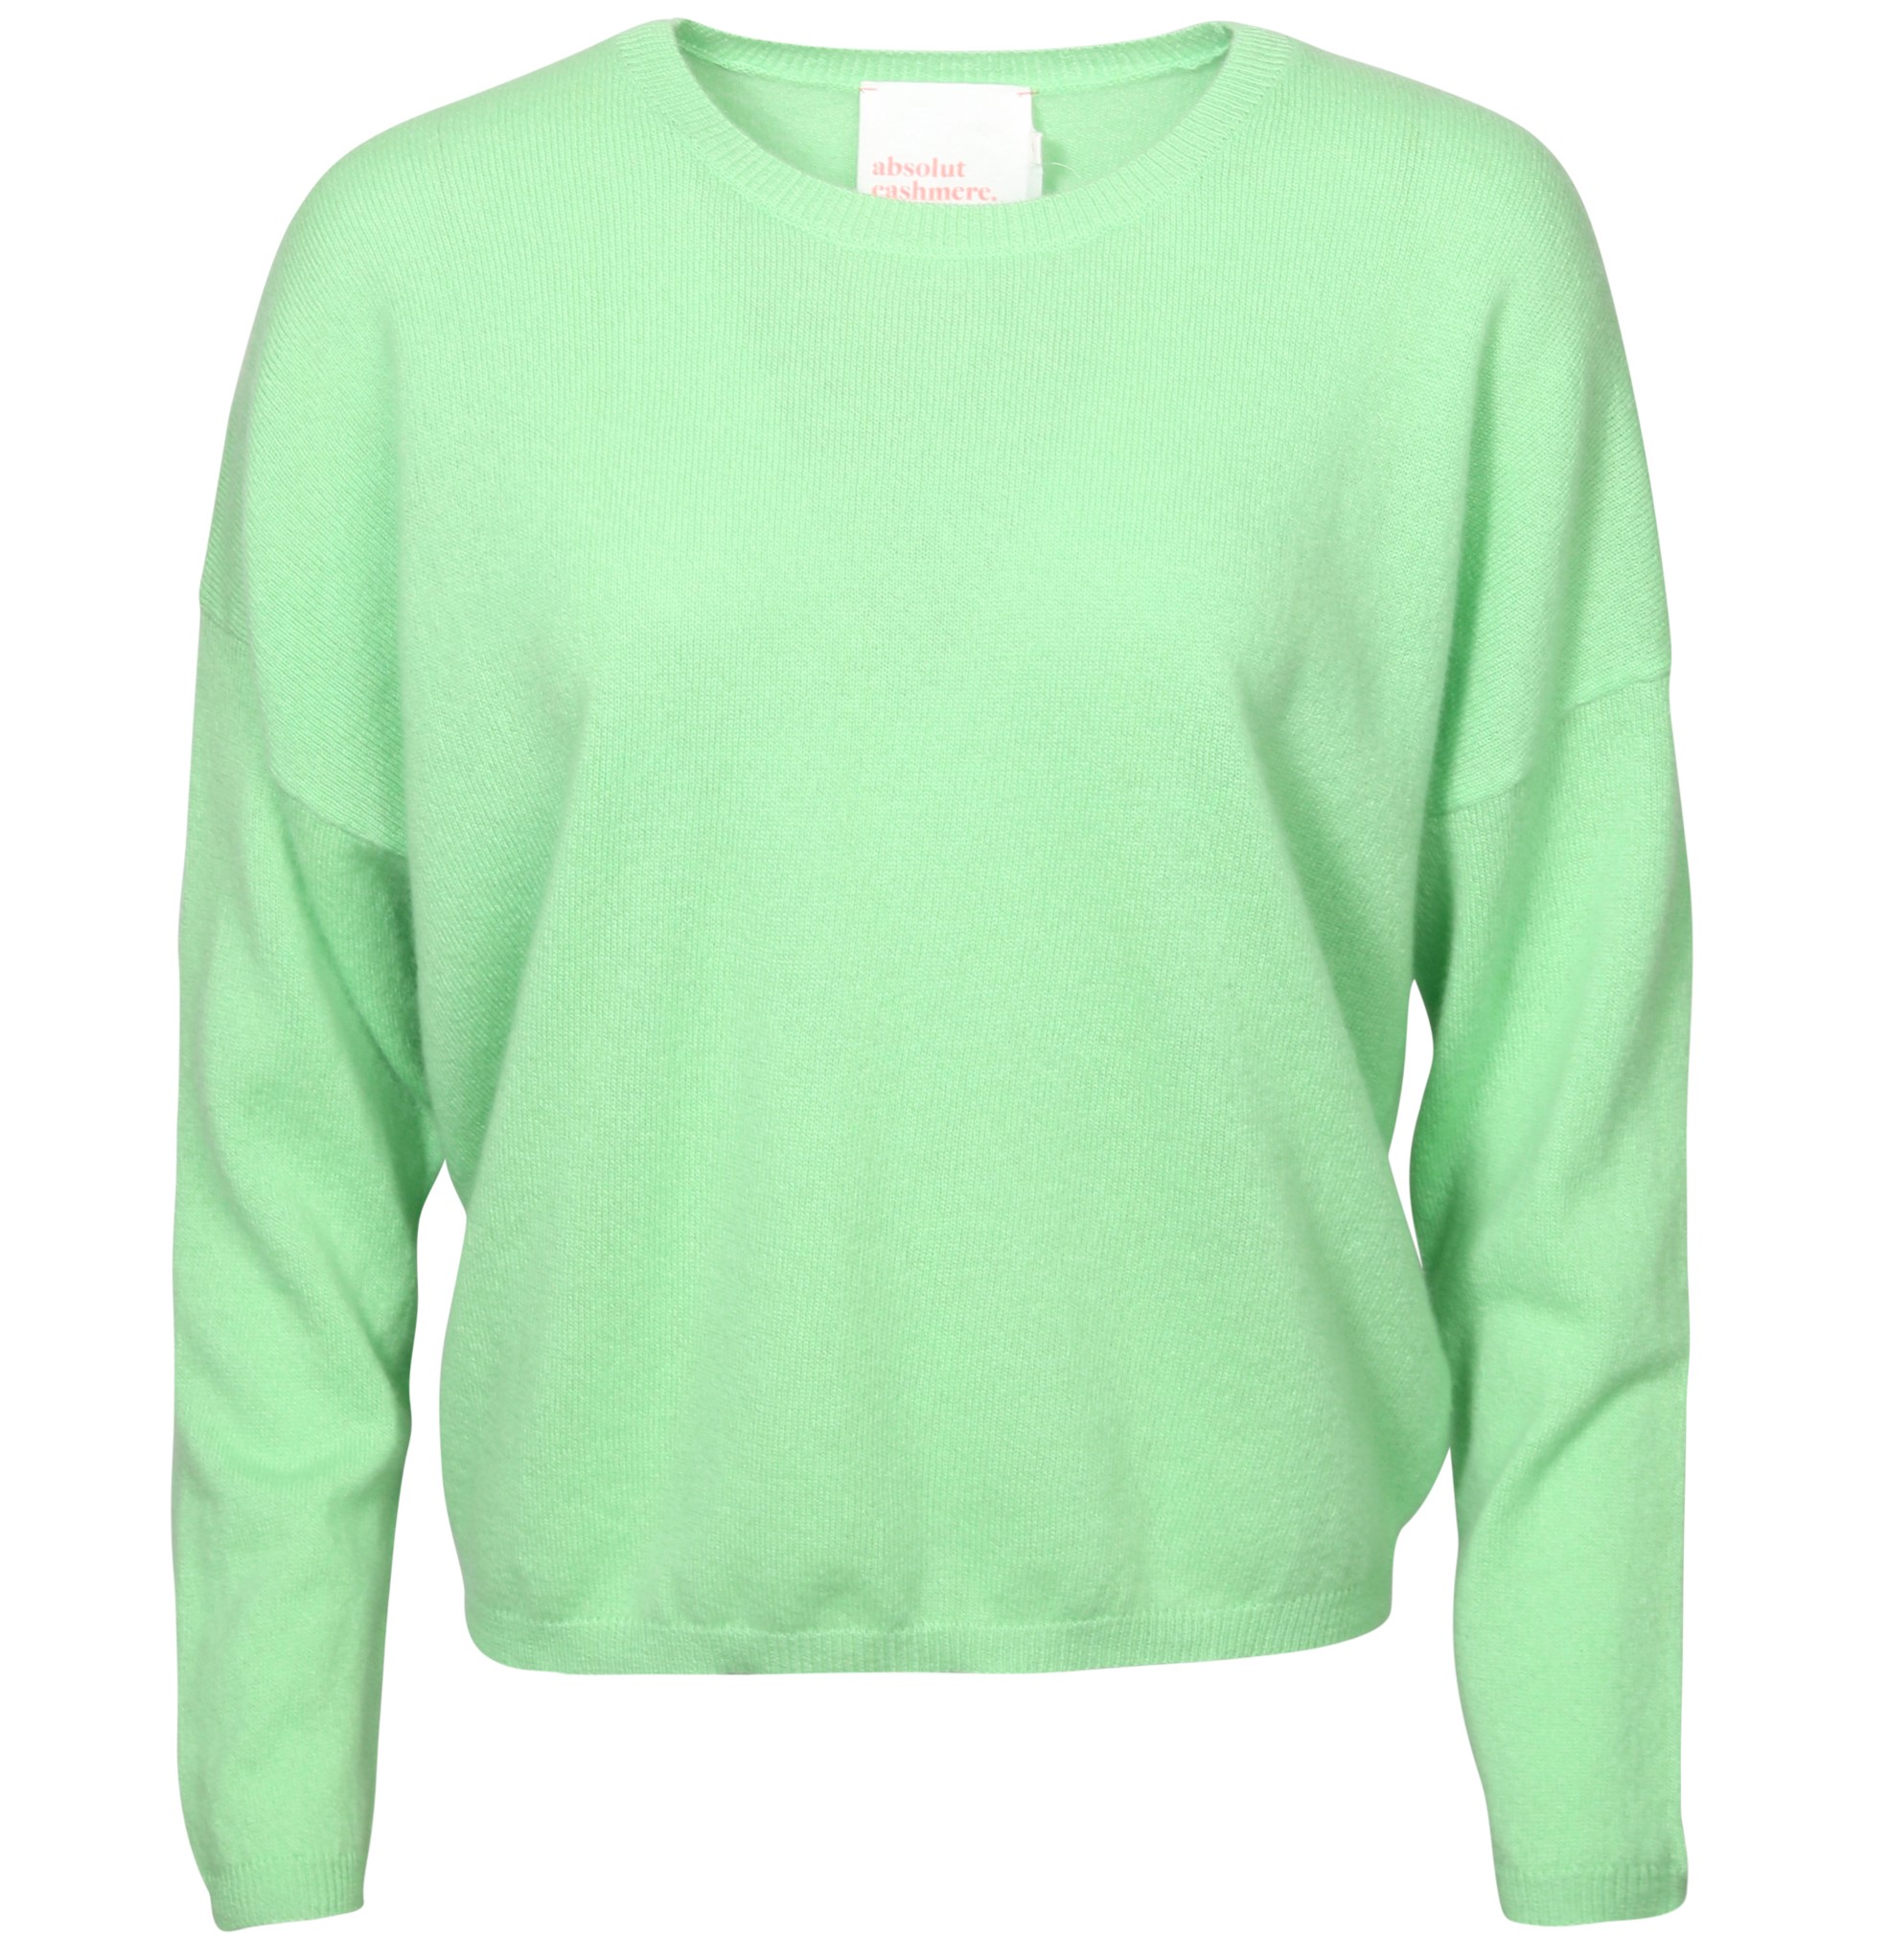 ABSOLUT CASHMERE Round Neck Sweater Kaira in Light Green M